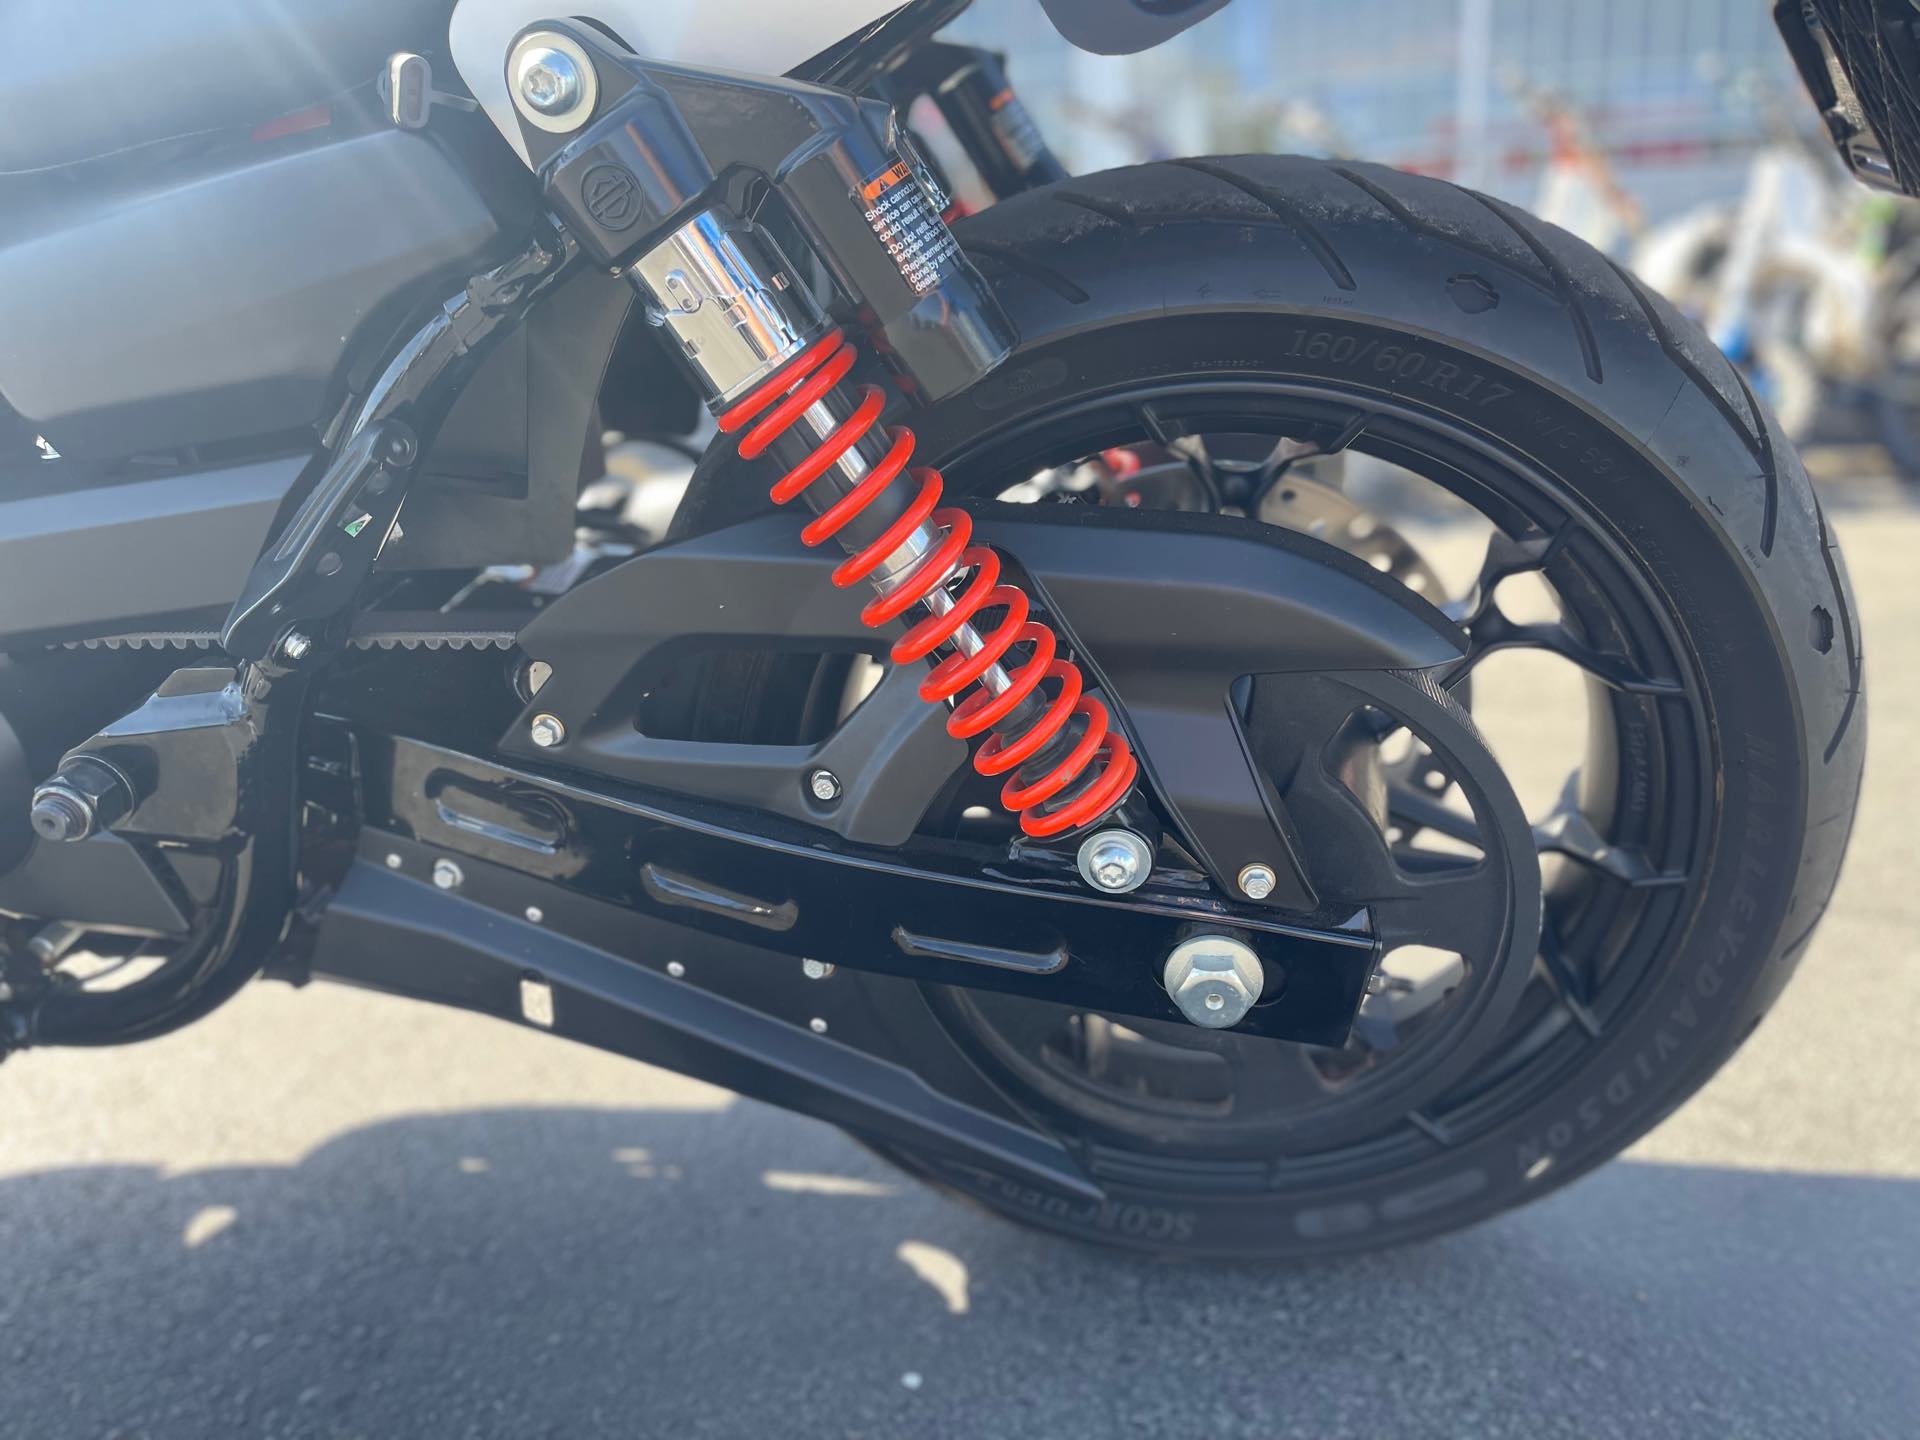 2018 Harley-Davidson Street Rod at Bobby J's Yamaha, Albuquerque, NM 87110